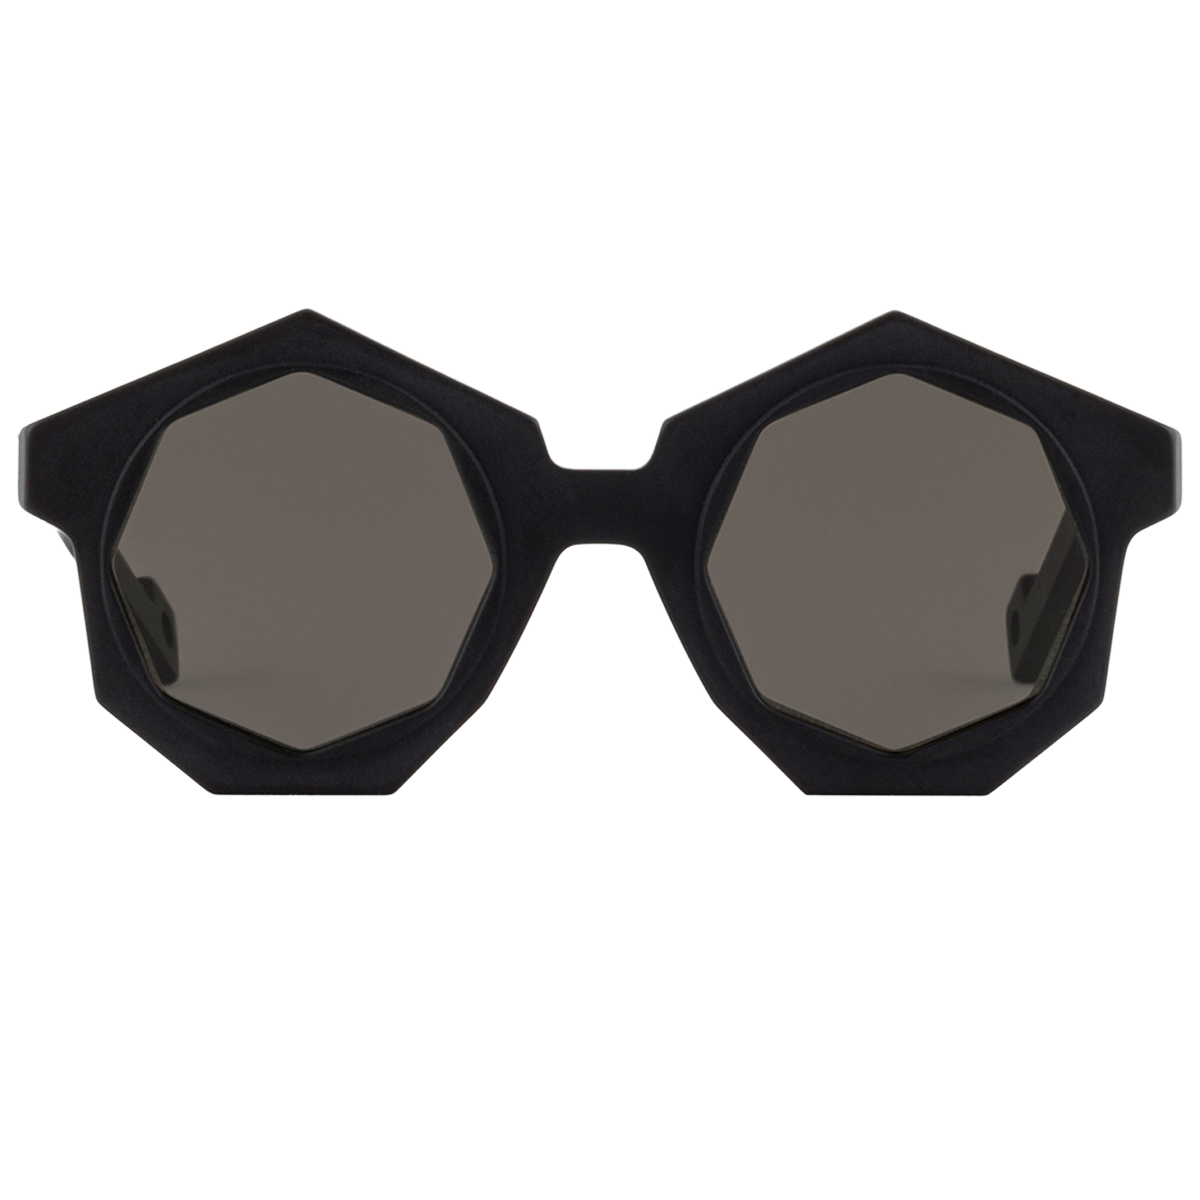 Pawaka SATU 1 Sunglasses Matte Black - New Collection 2018